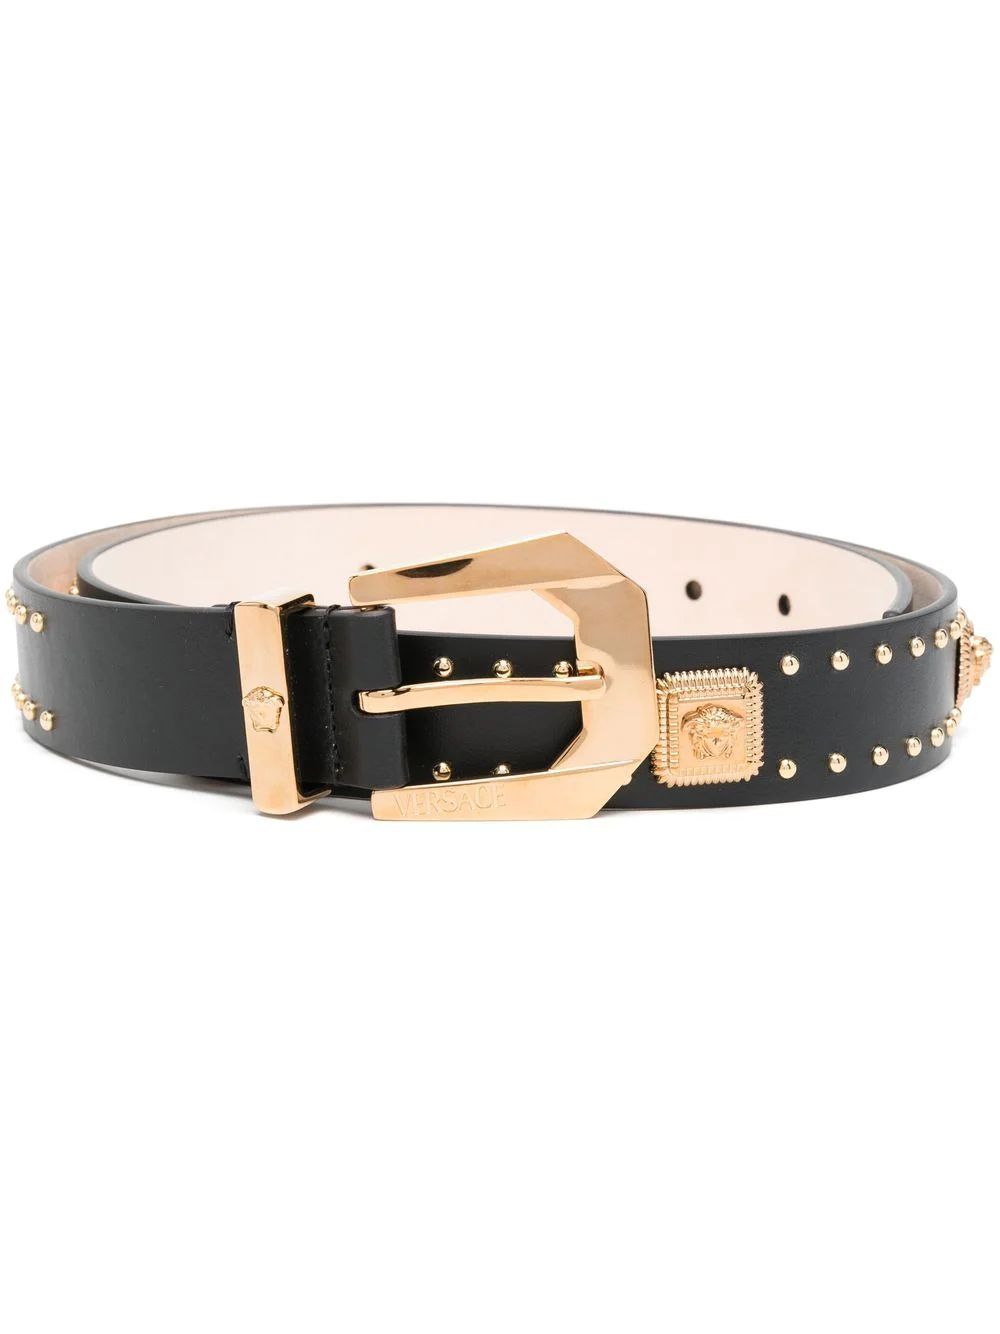 Versace Studded Leather Belt - Farfetch | Farfetch Global